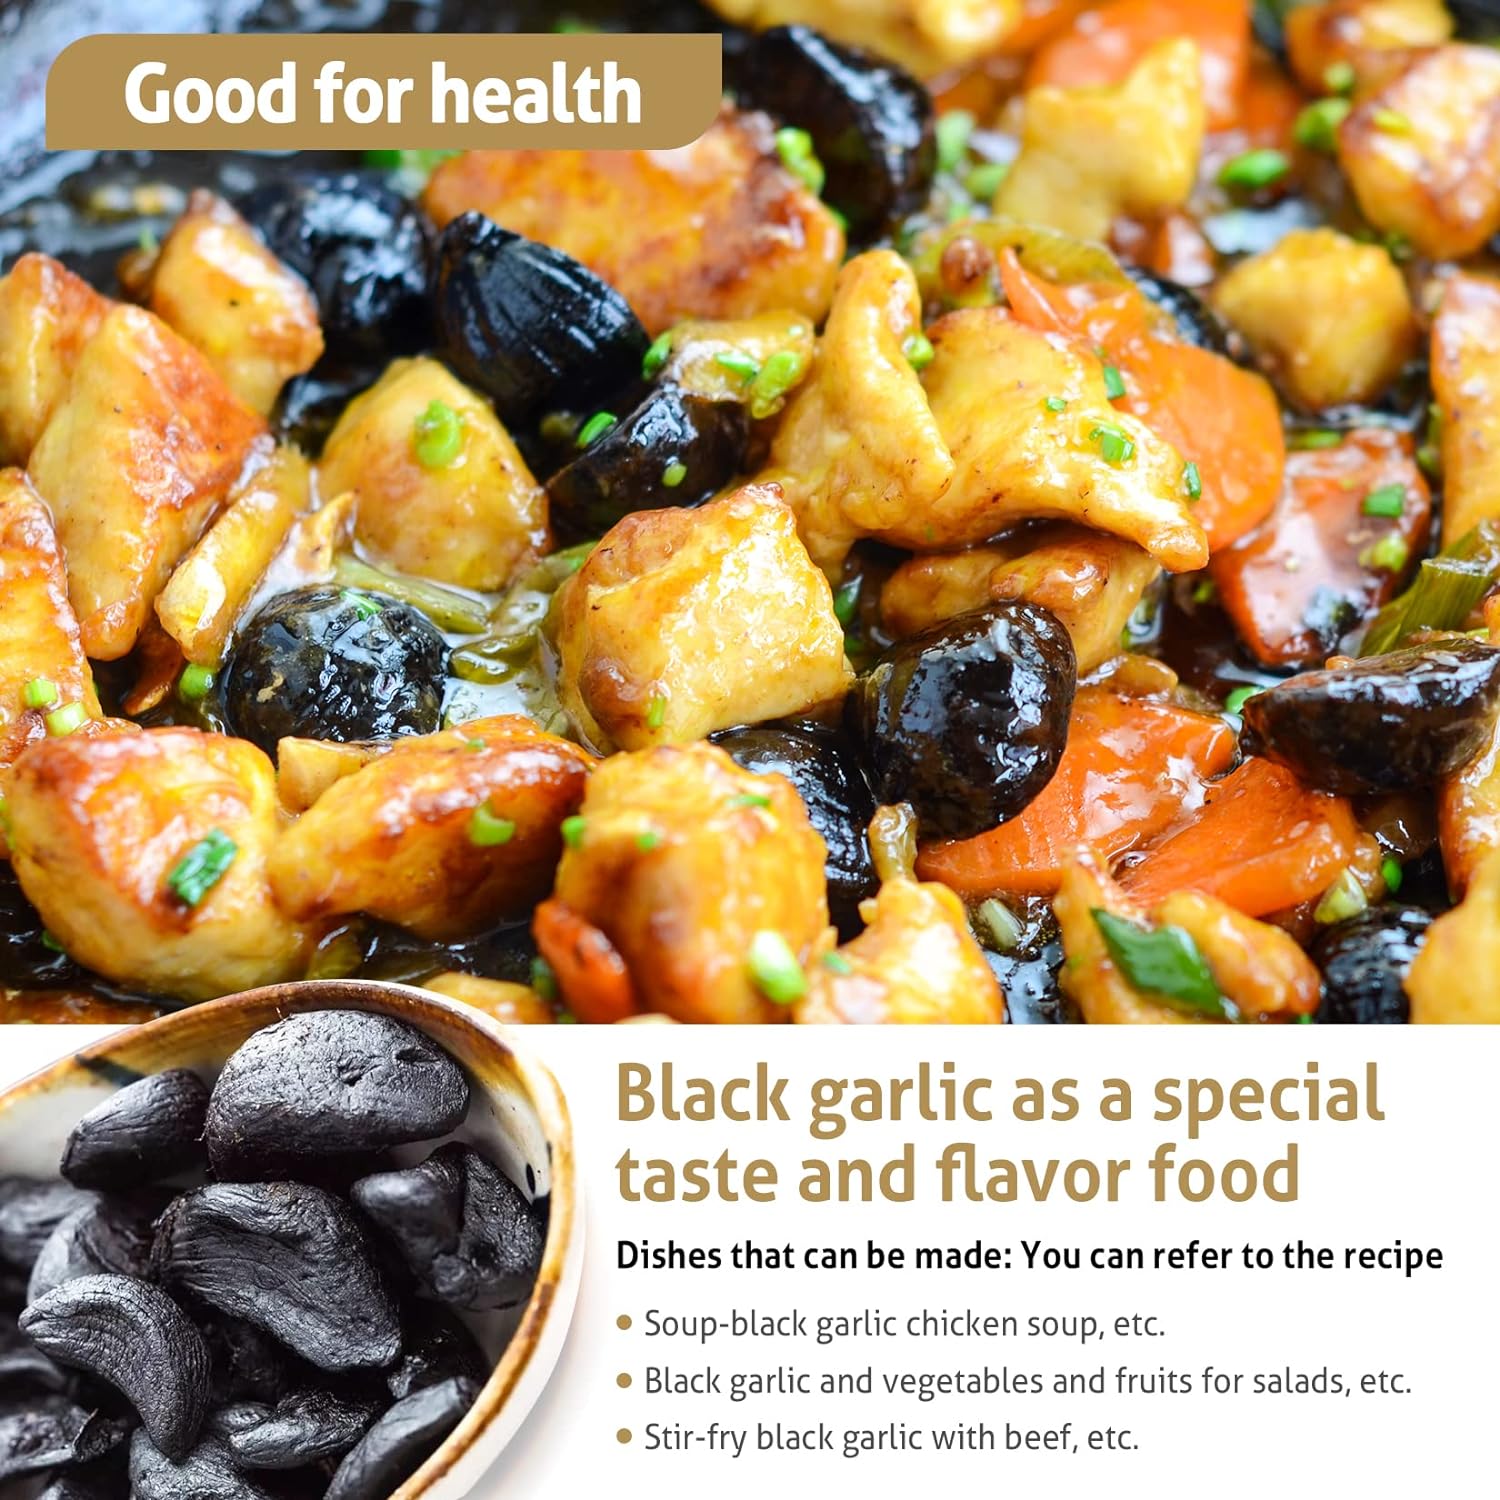 Black Garlic 170g Whole Black Garlic Aged for Full 90 Days Black Garlic Jar 0.37 Pounds : Grocery & Gourmet Food